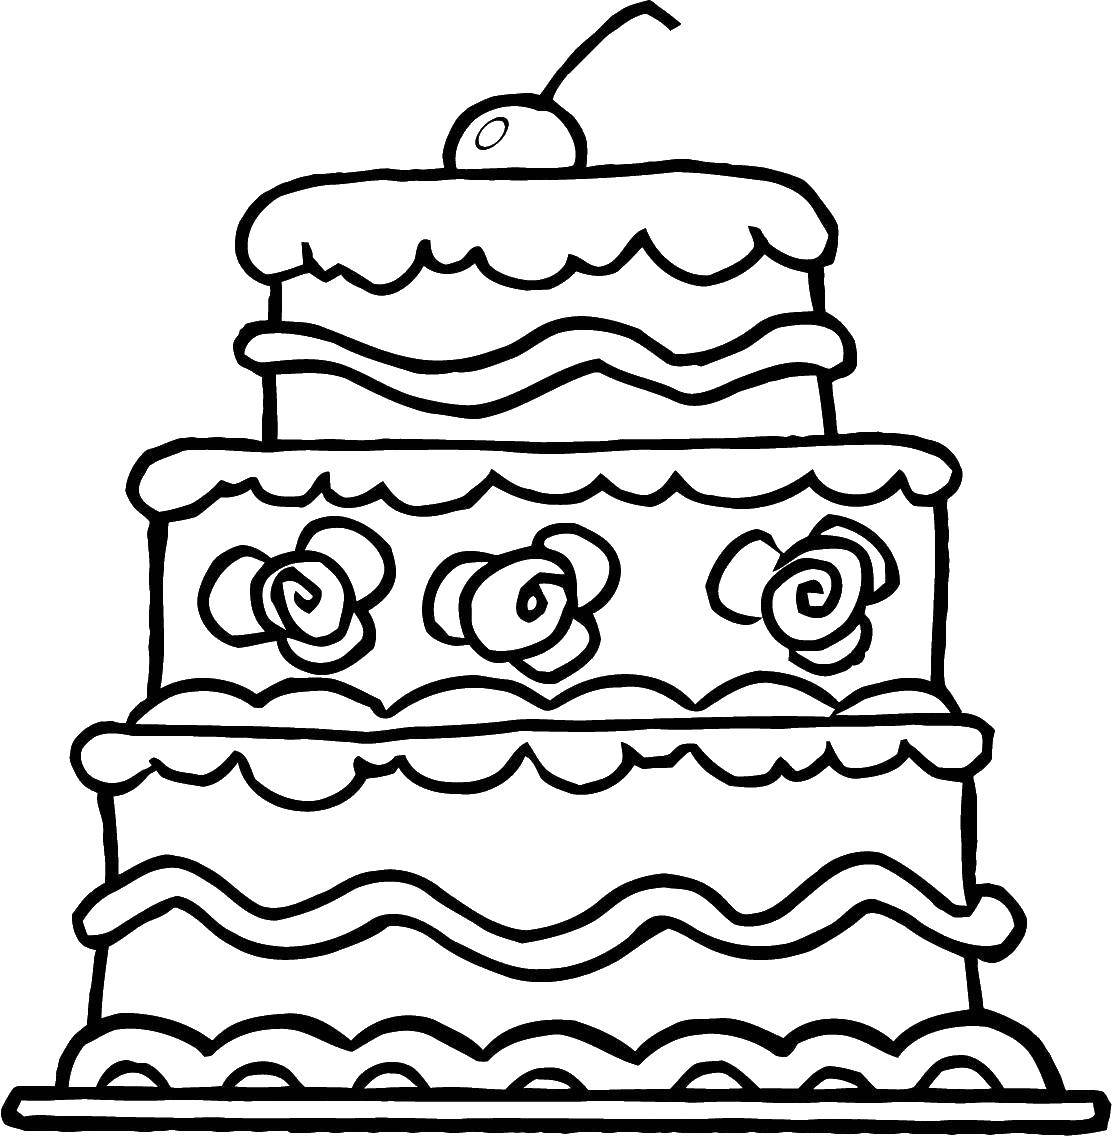 Название: Раскраска Торт с вишенкой. Категория: торты. Теги: Торт, еда, праздник.